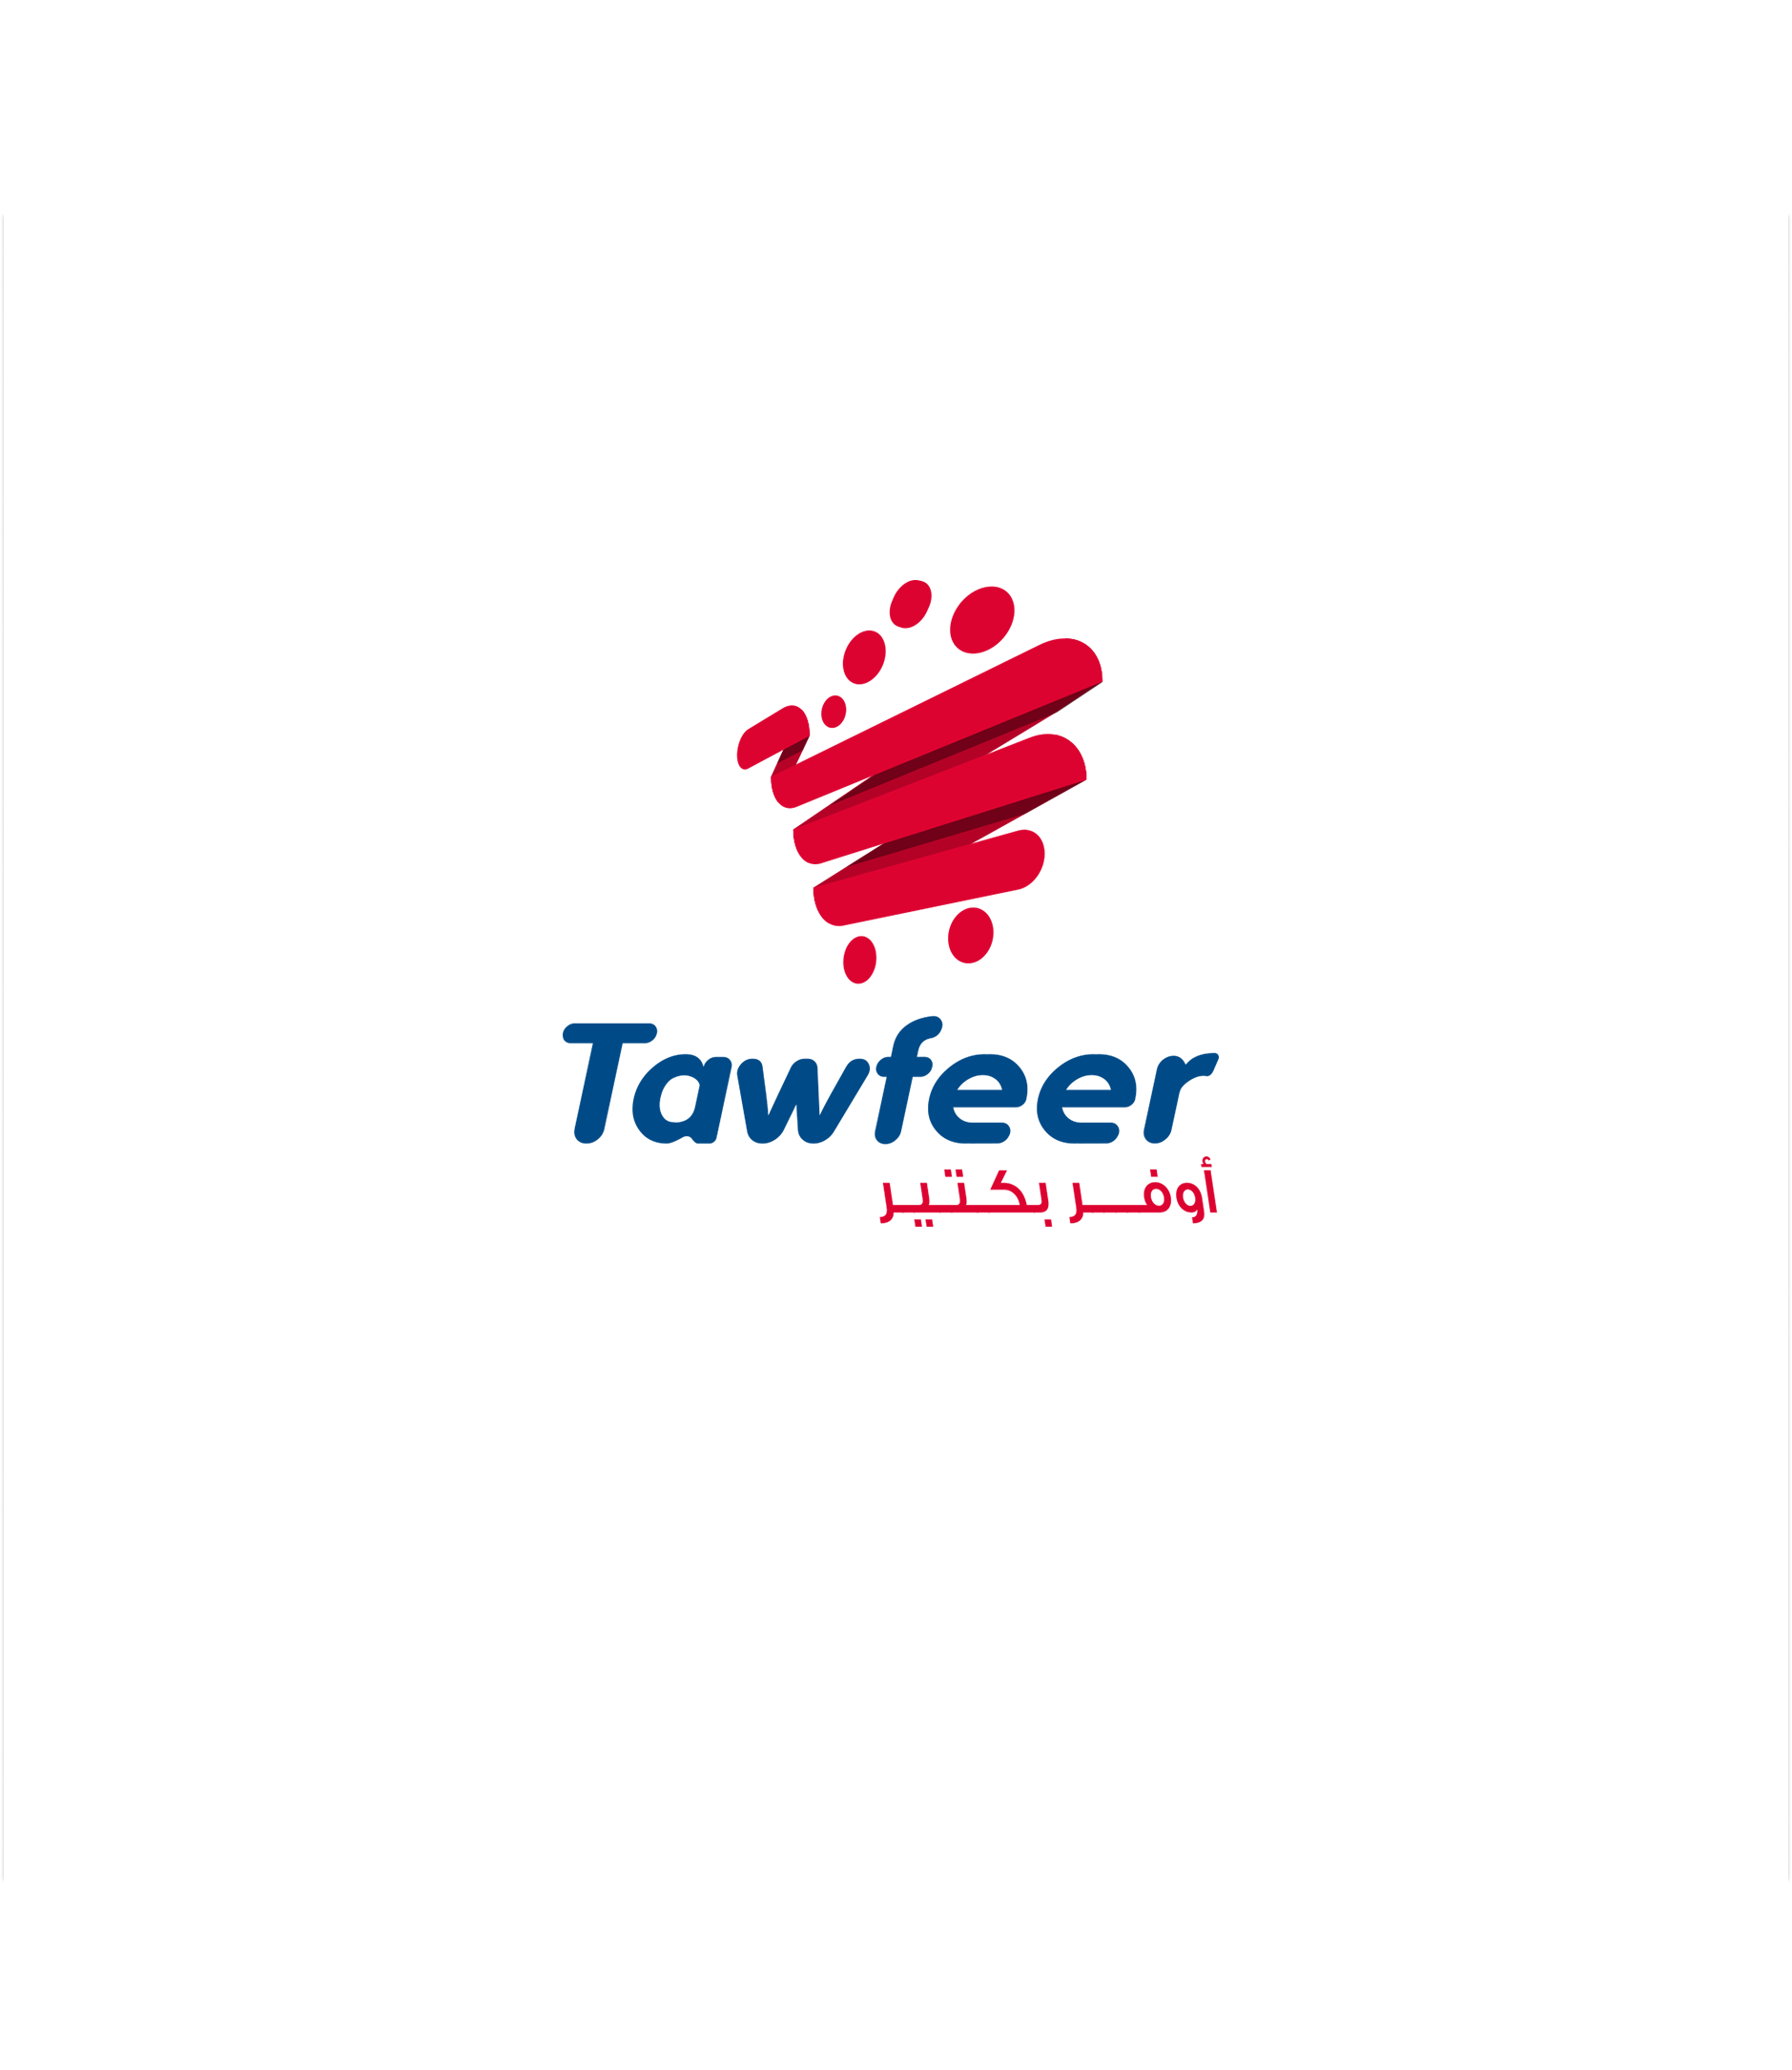 Tawfeer Supermarket